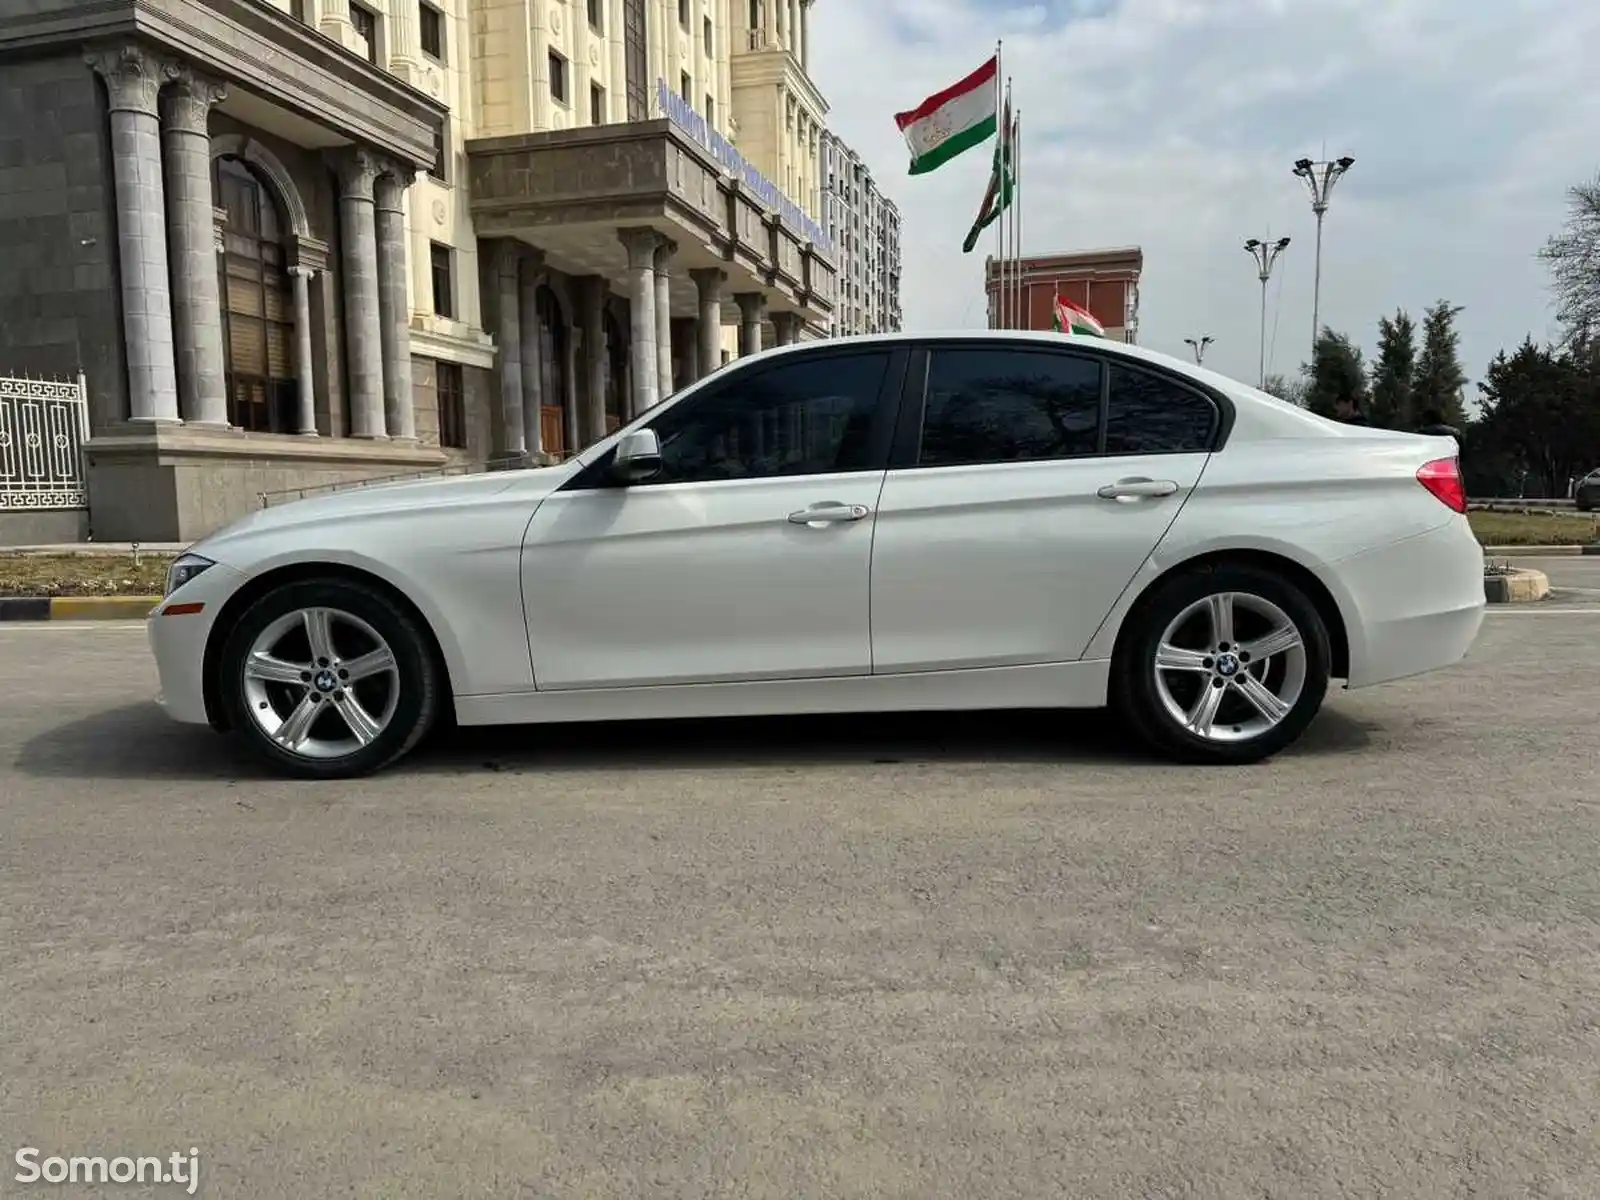 BMW 3 series, 2013-2